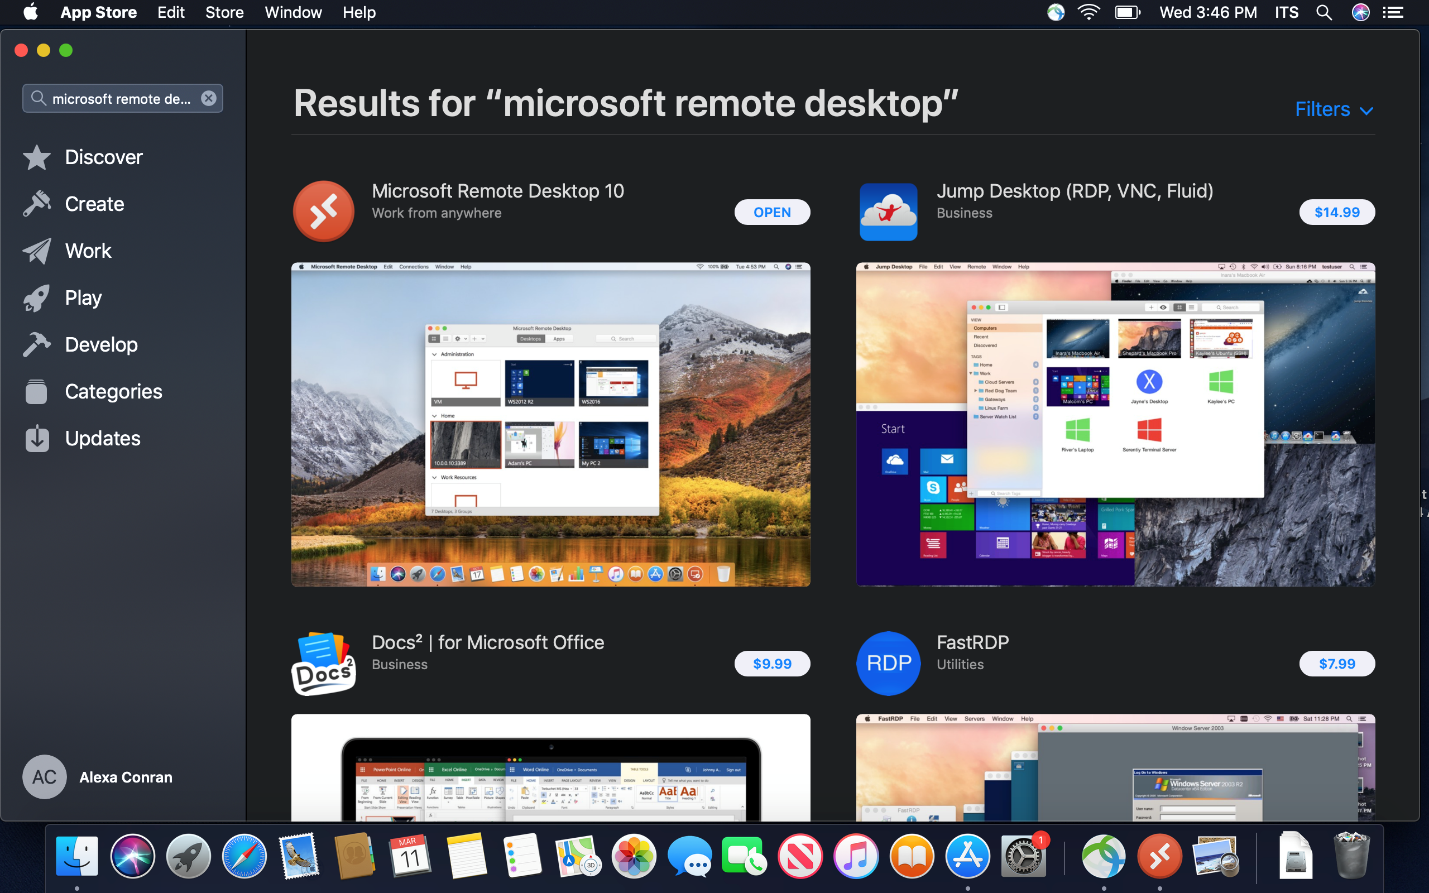 "Microsoft Remote Desktop" search results in app store